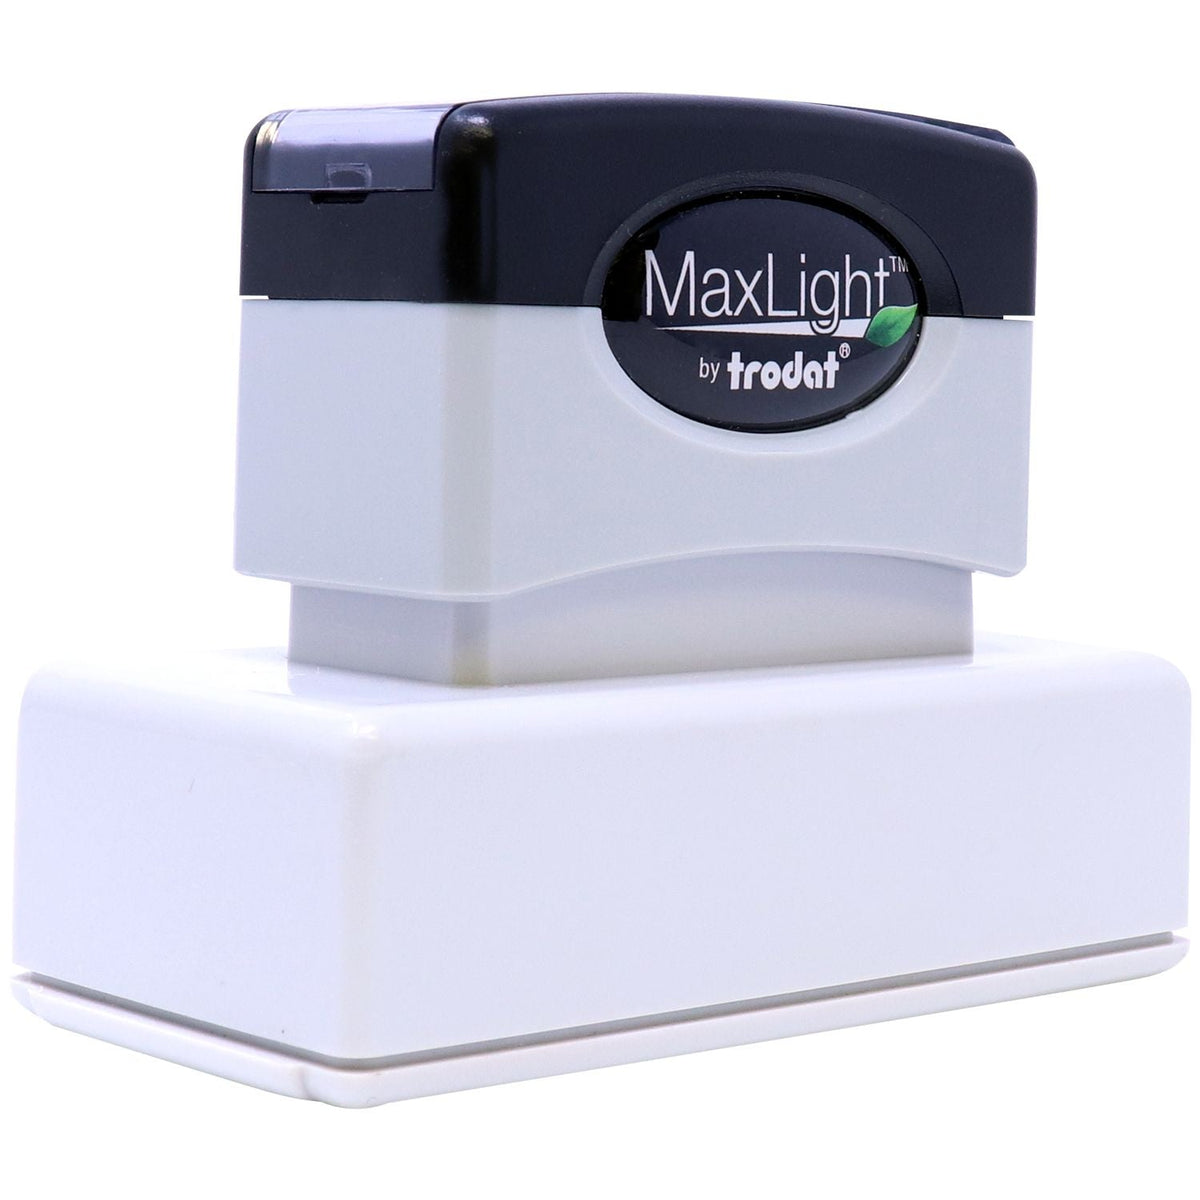 Maxlight Custom Stamp Xl2 185 Front Angle